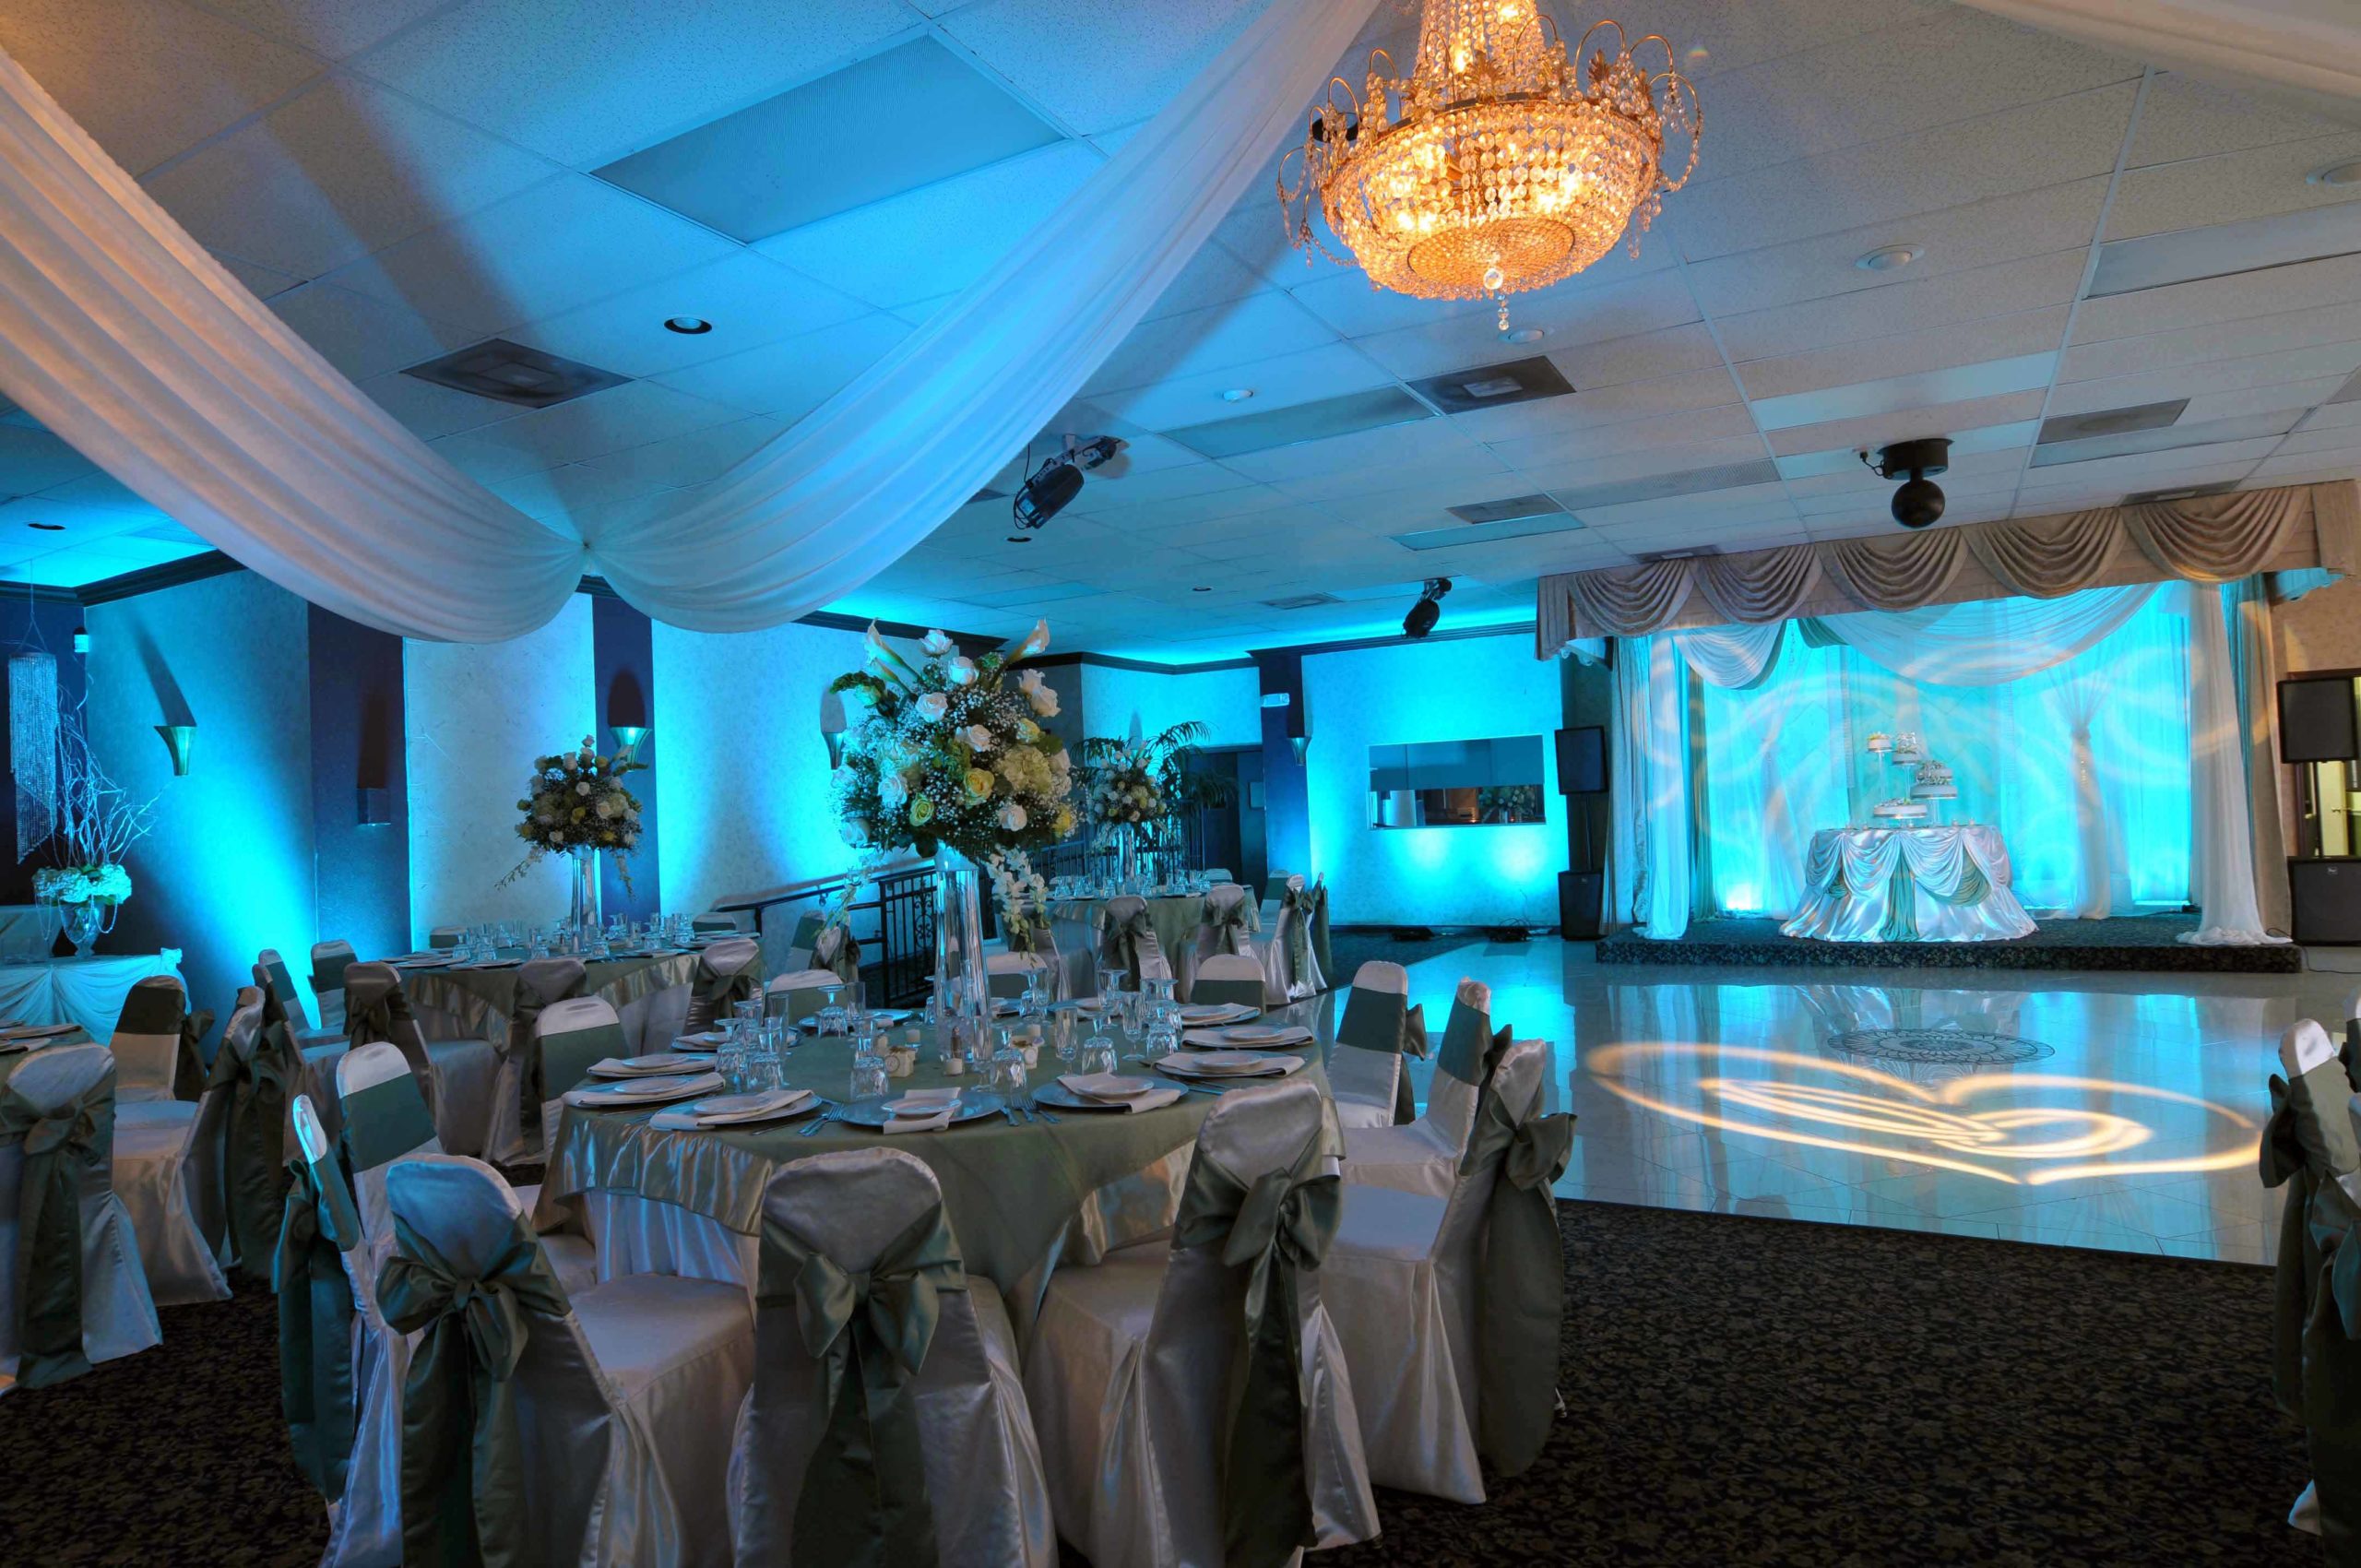 Wedding reception ballroom with blue up lighting